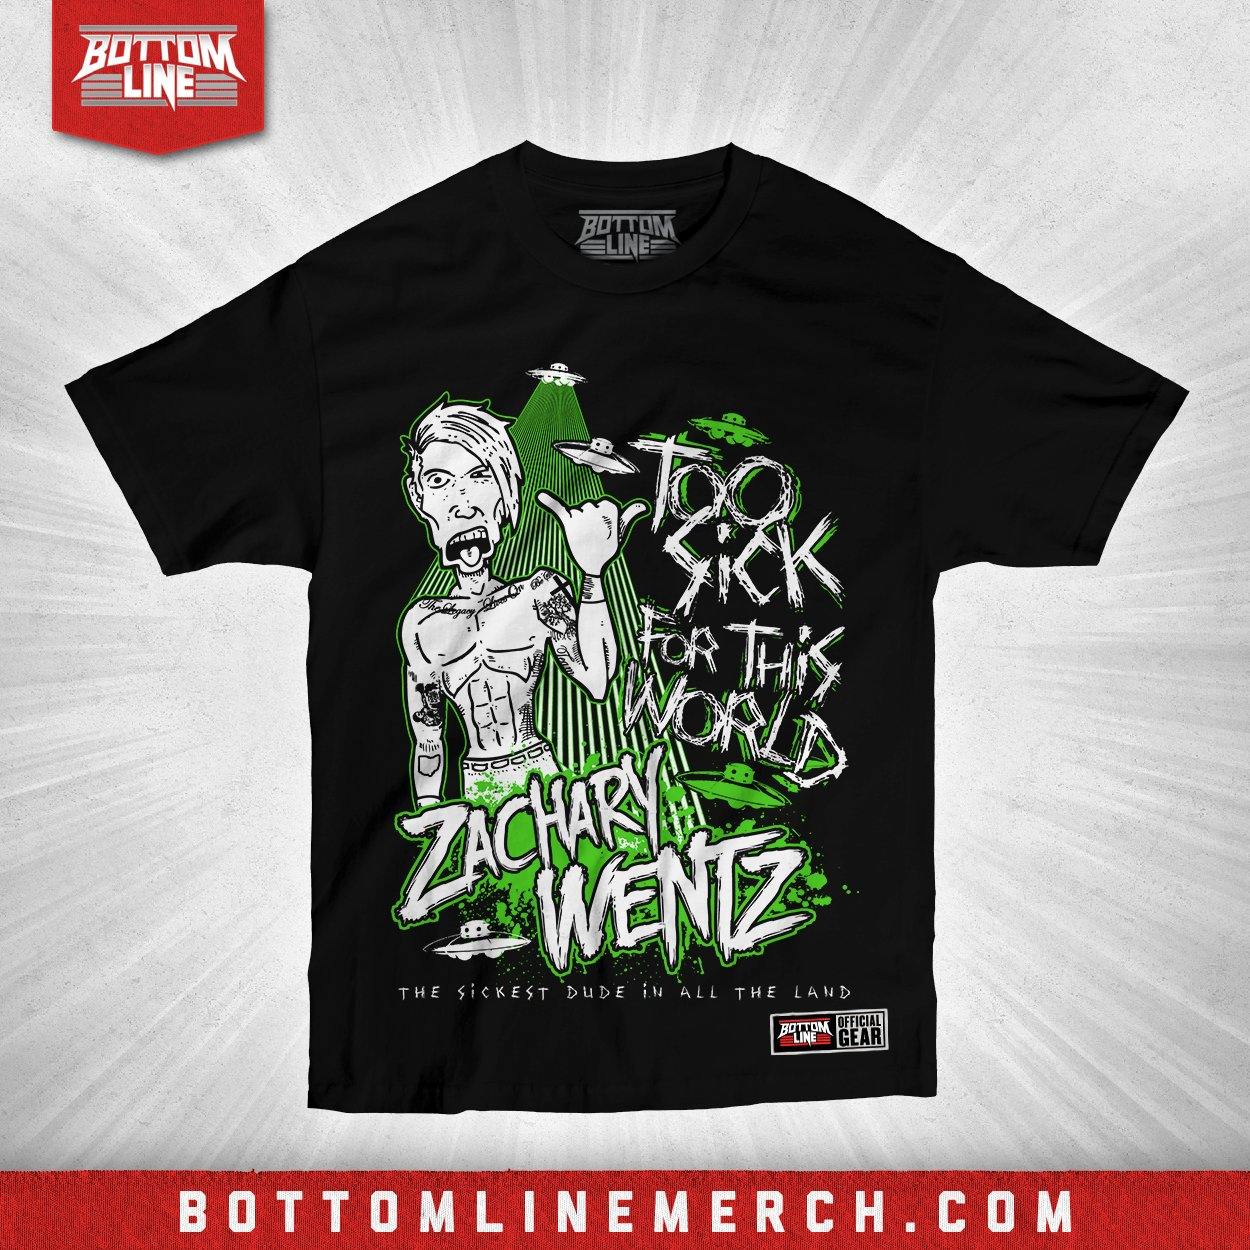 Buy Now – Zachary Wentz "Sickest Dude" Shirt – Wrestler & Wrestling Merch – Bottom Line